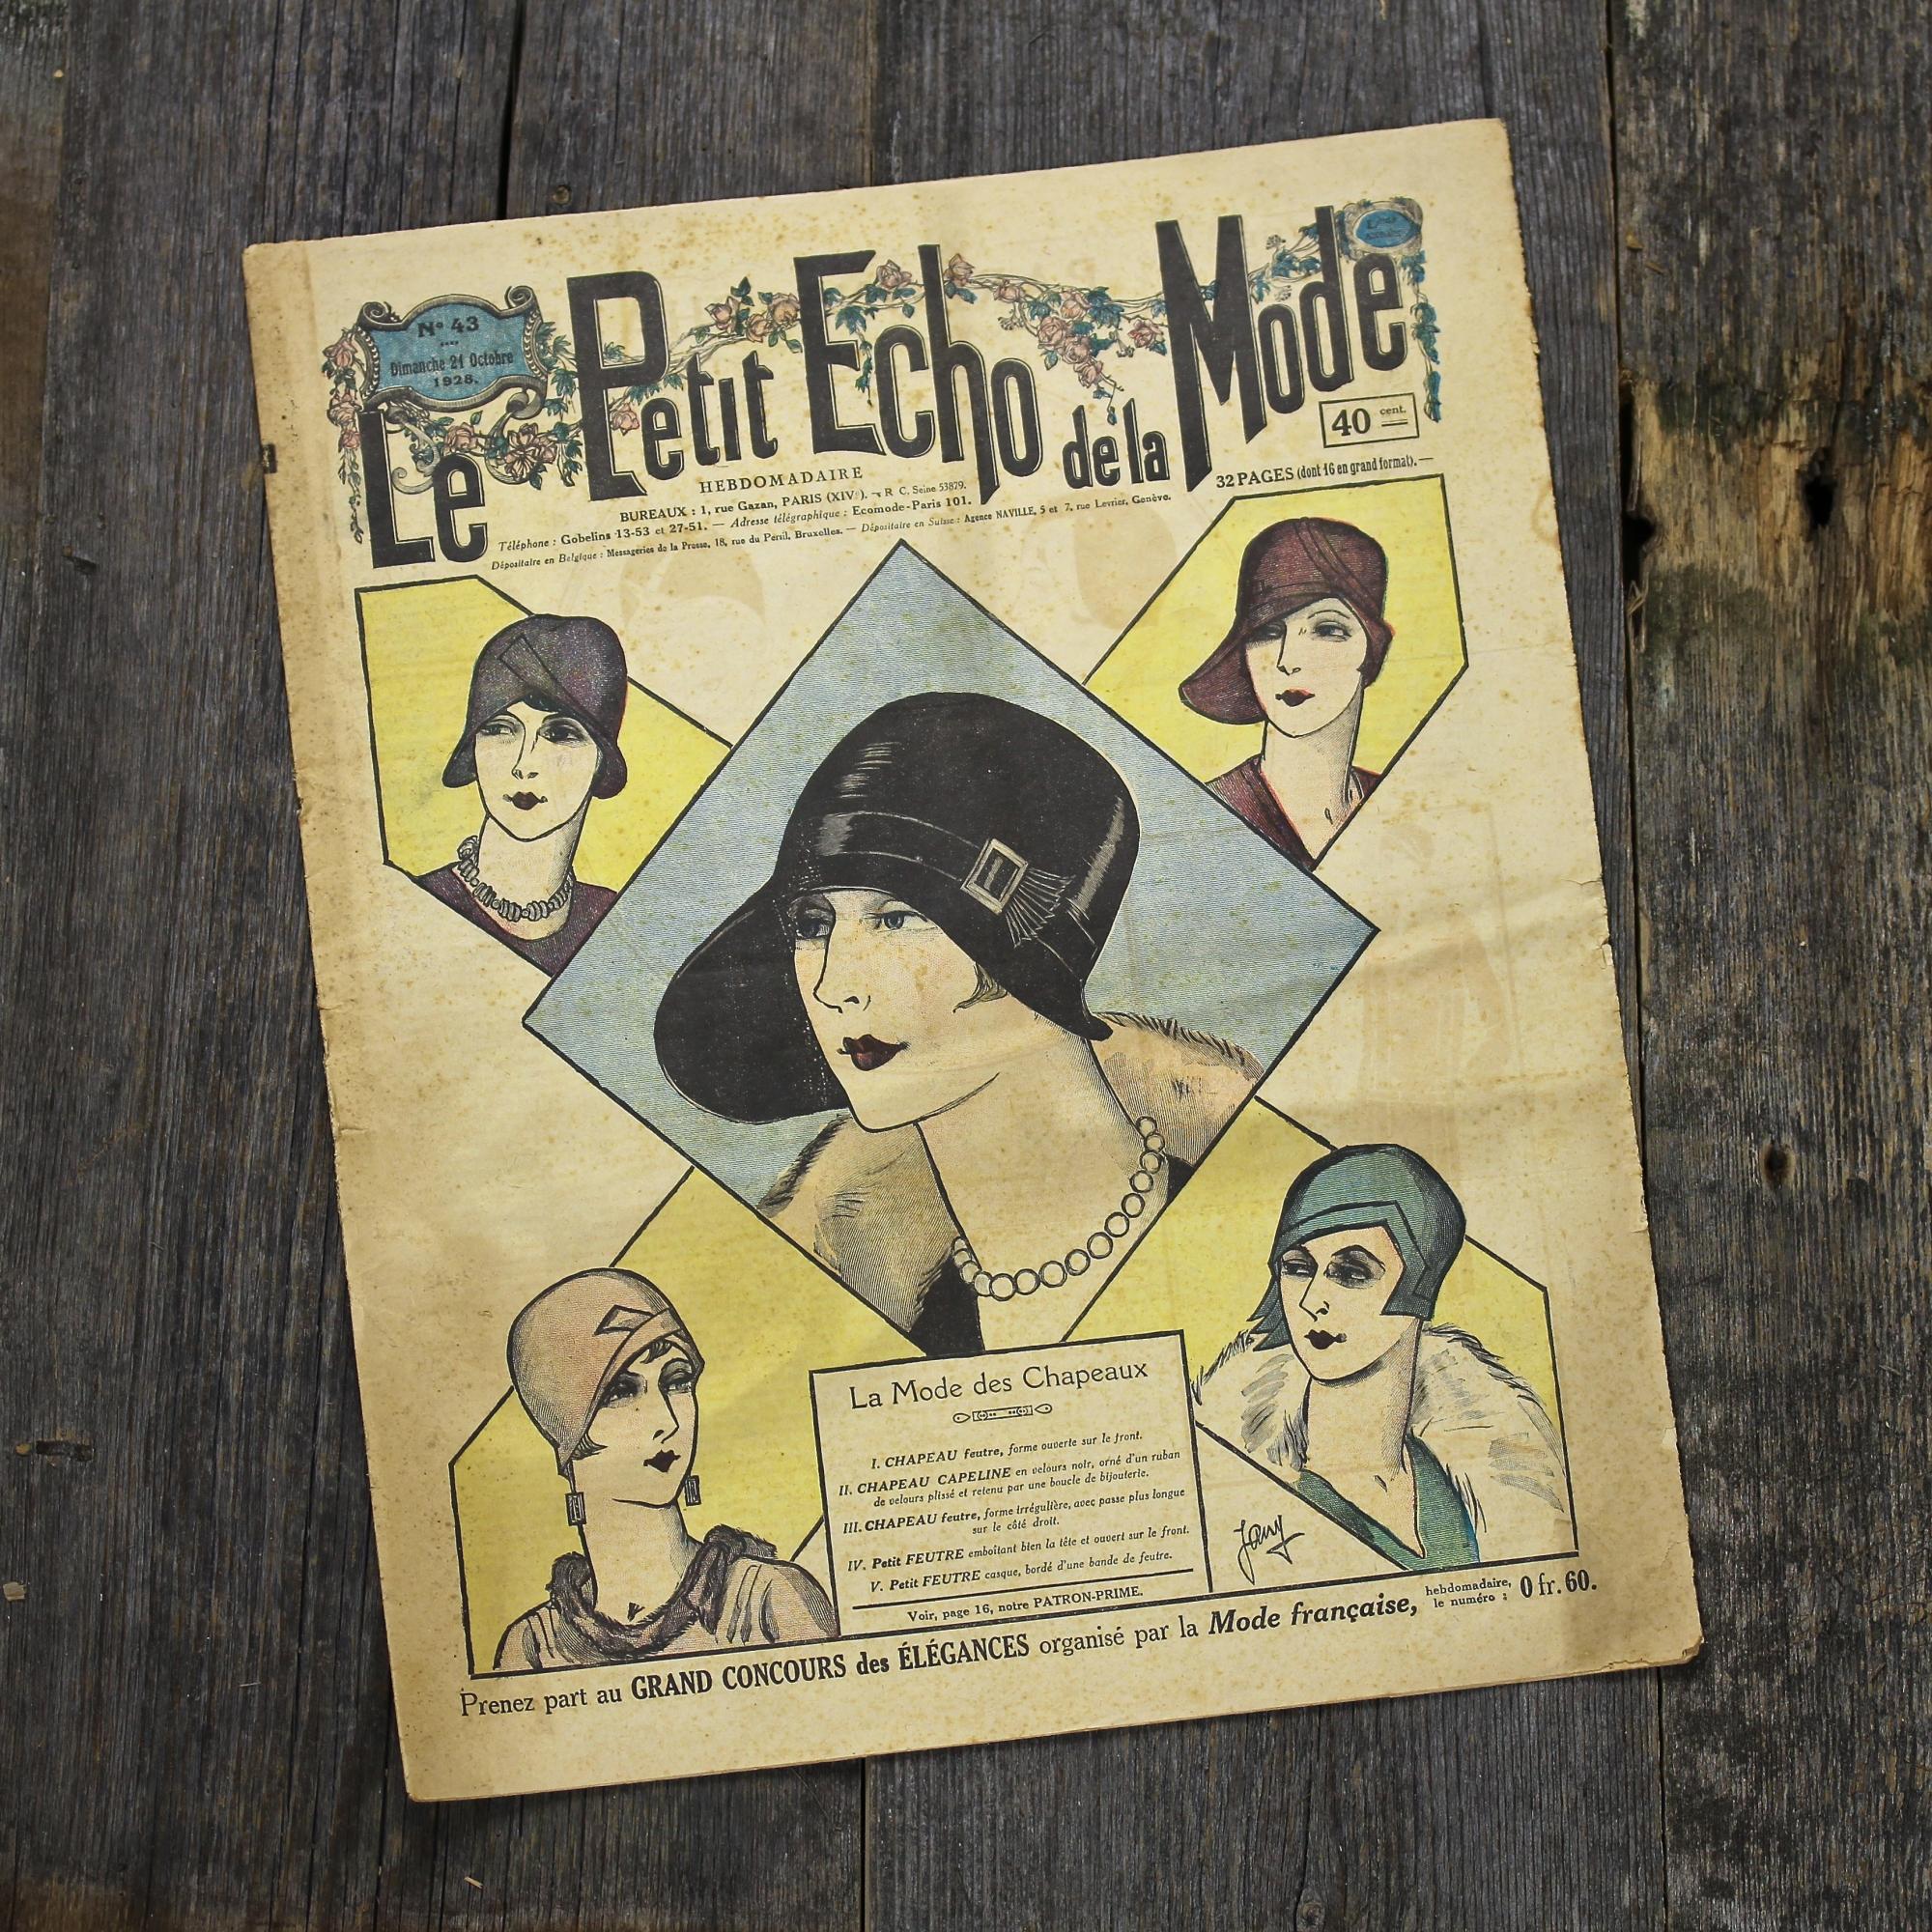 Журнал мод "Le Petit Echo de la Mode"